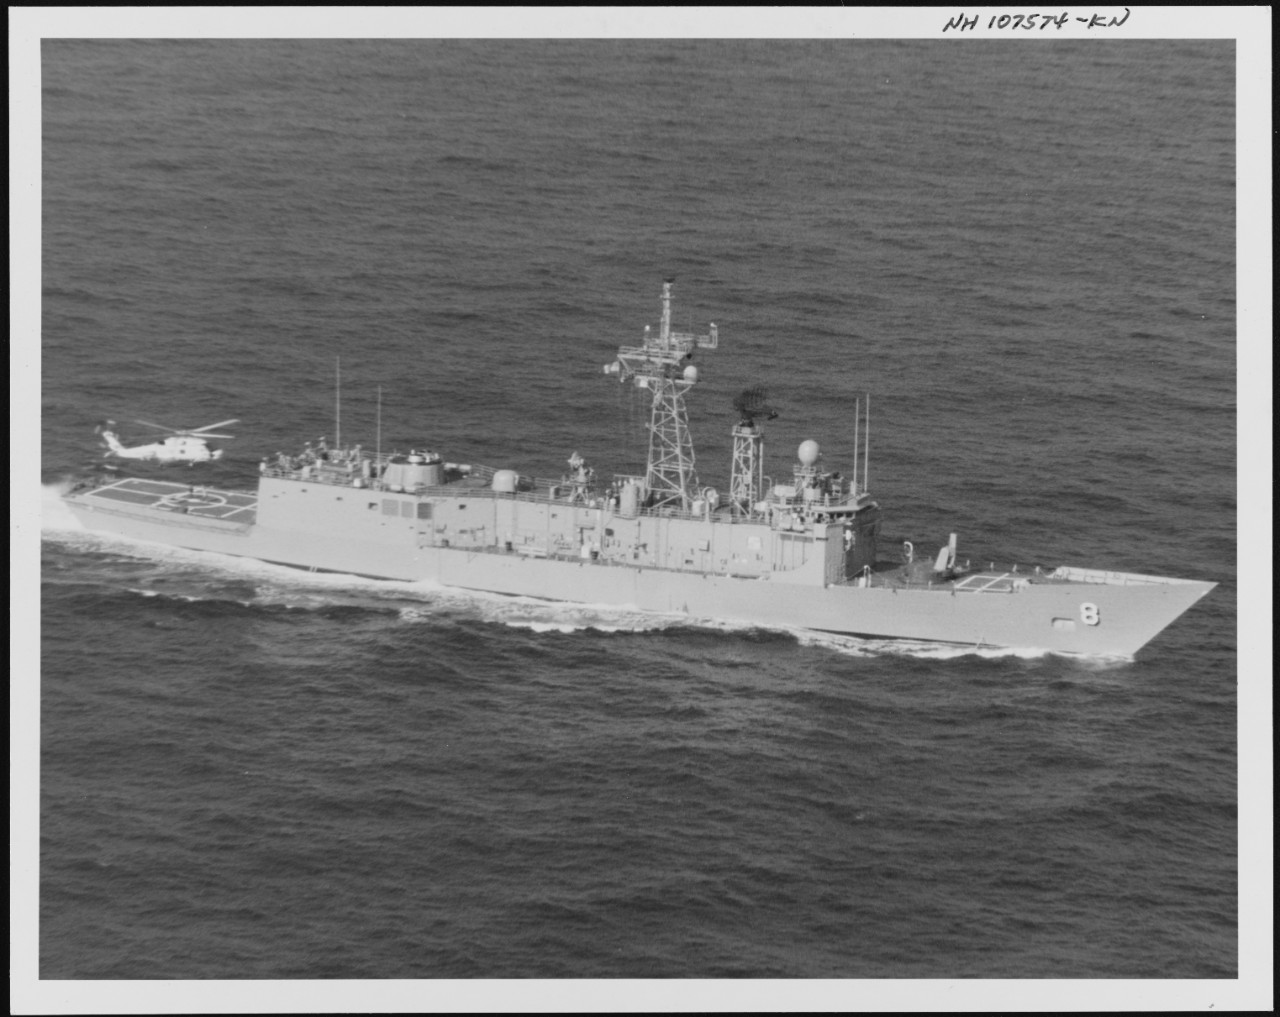 Photo #: NH 107574-KN USS McInerney